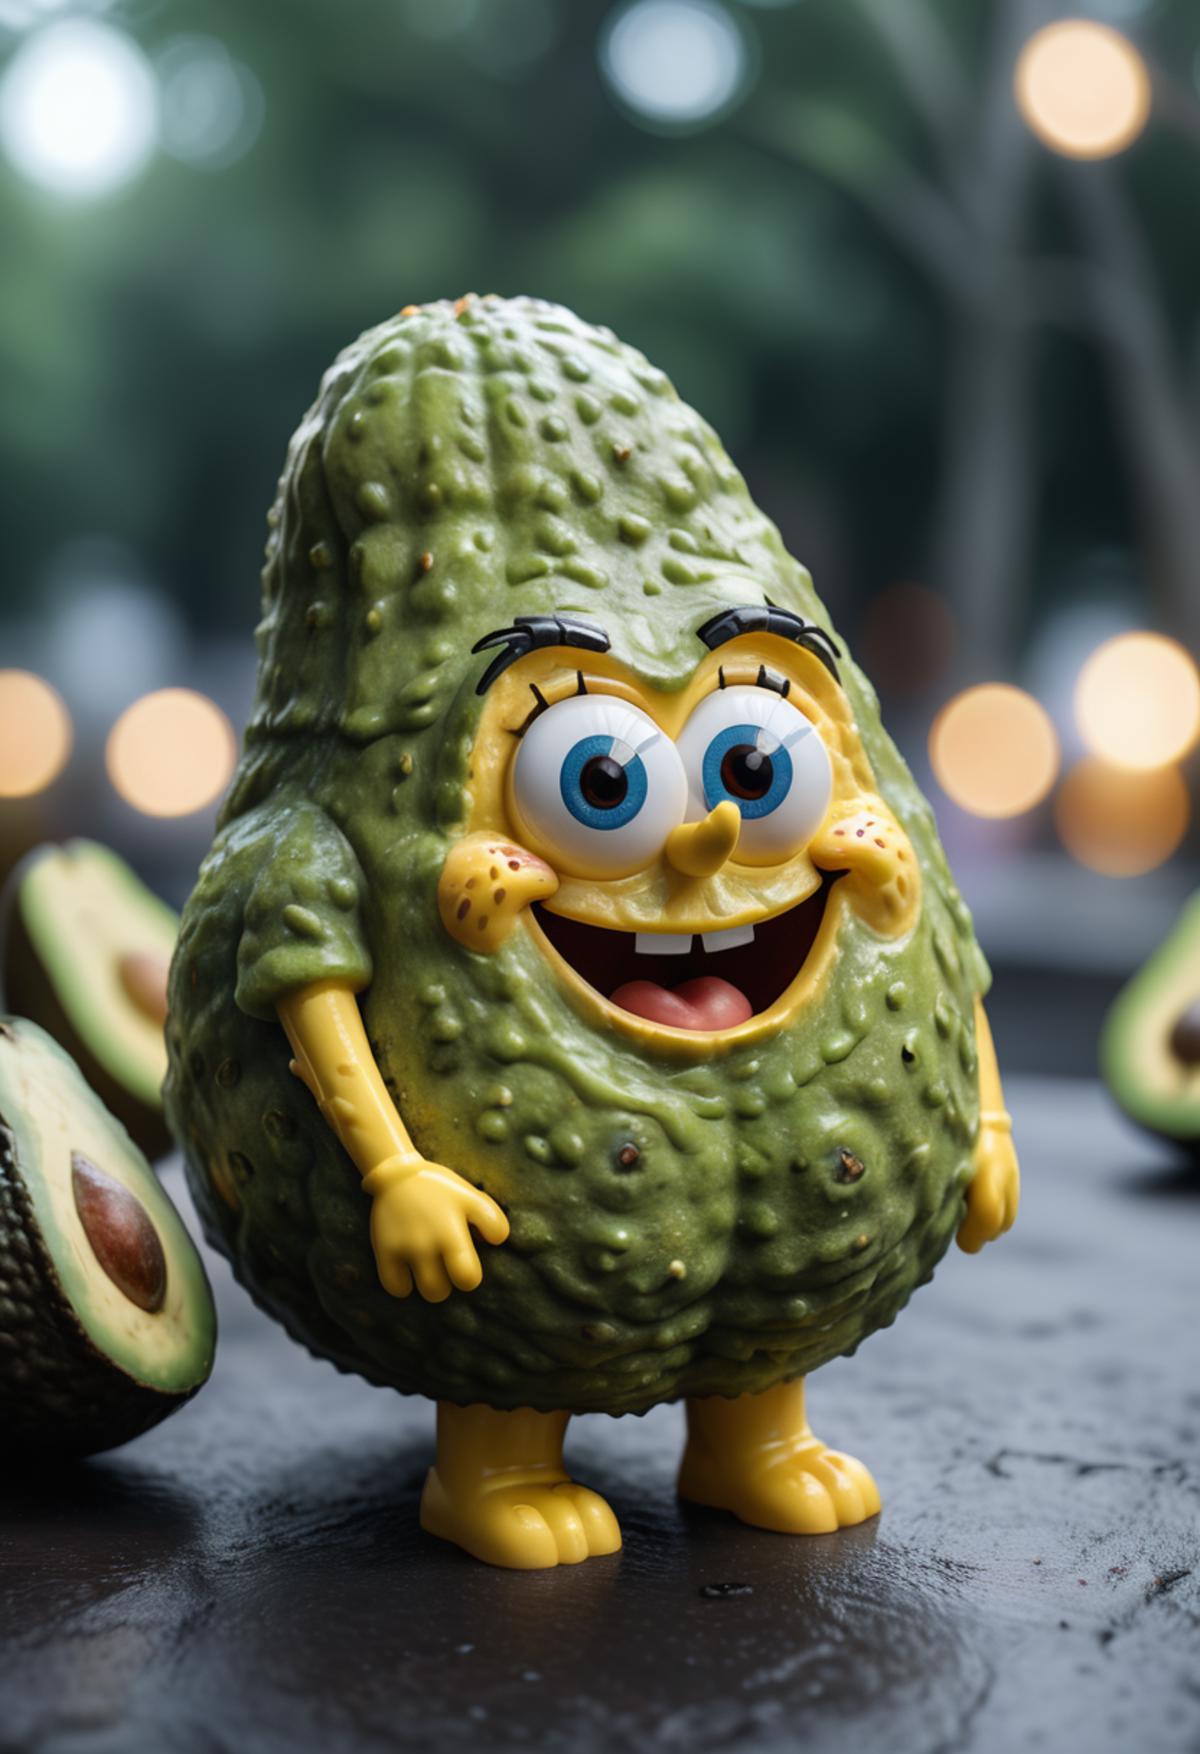 A cute cartoon avocado with a smiling face.